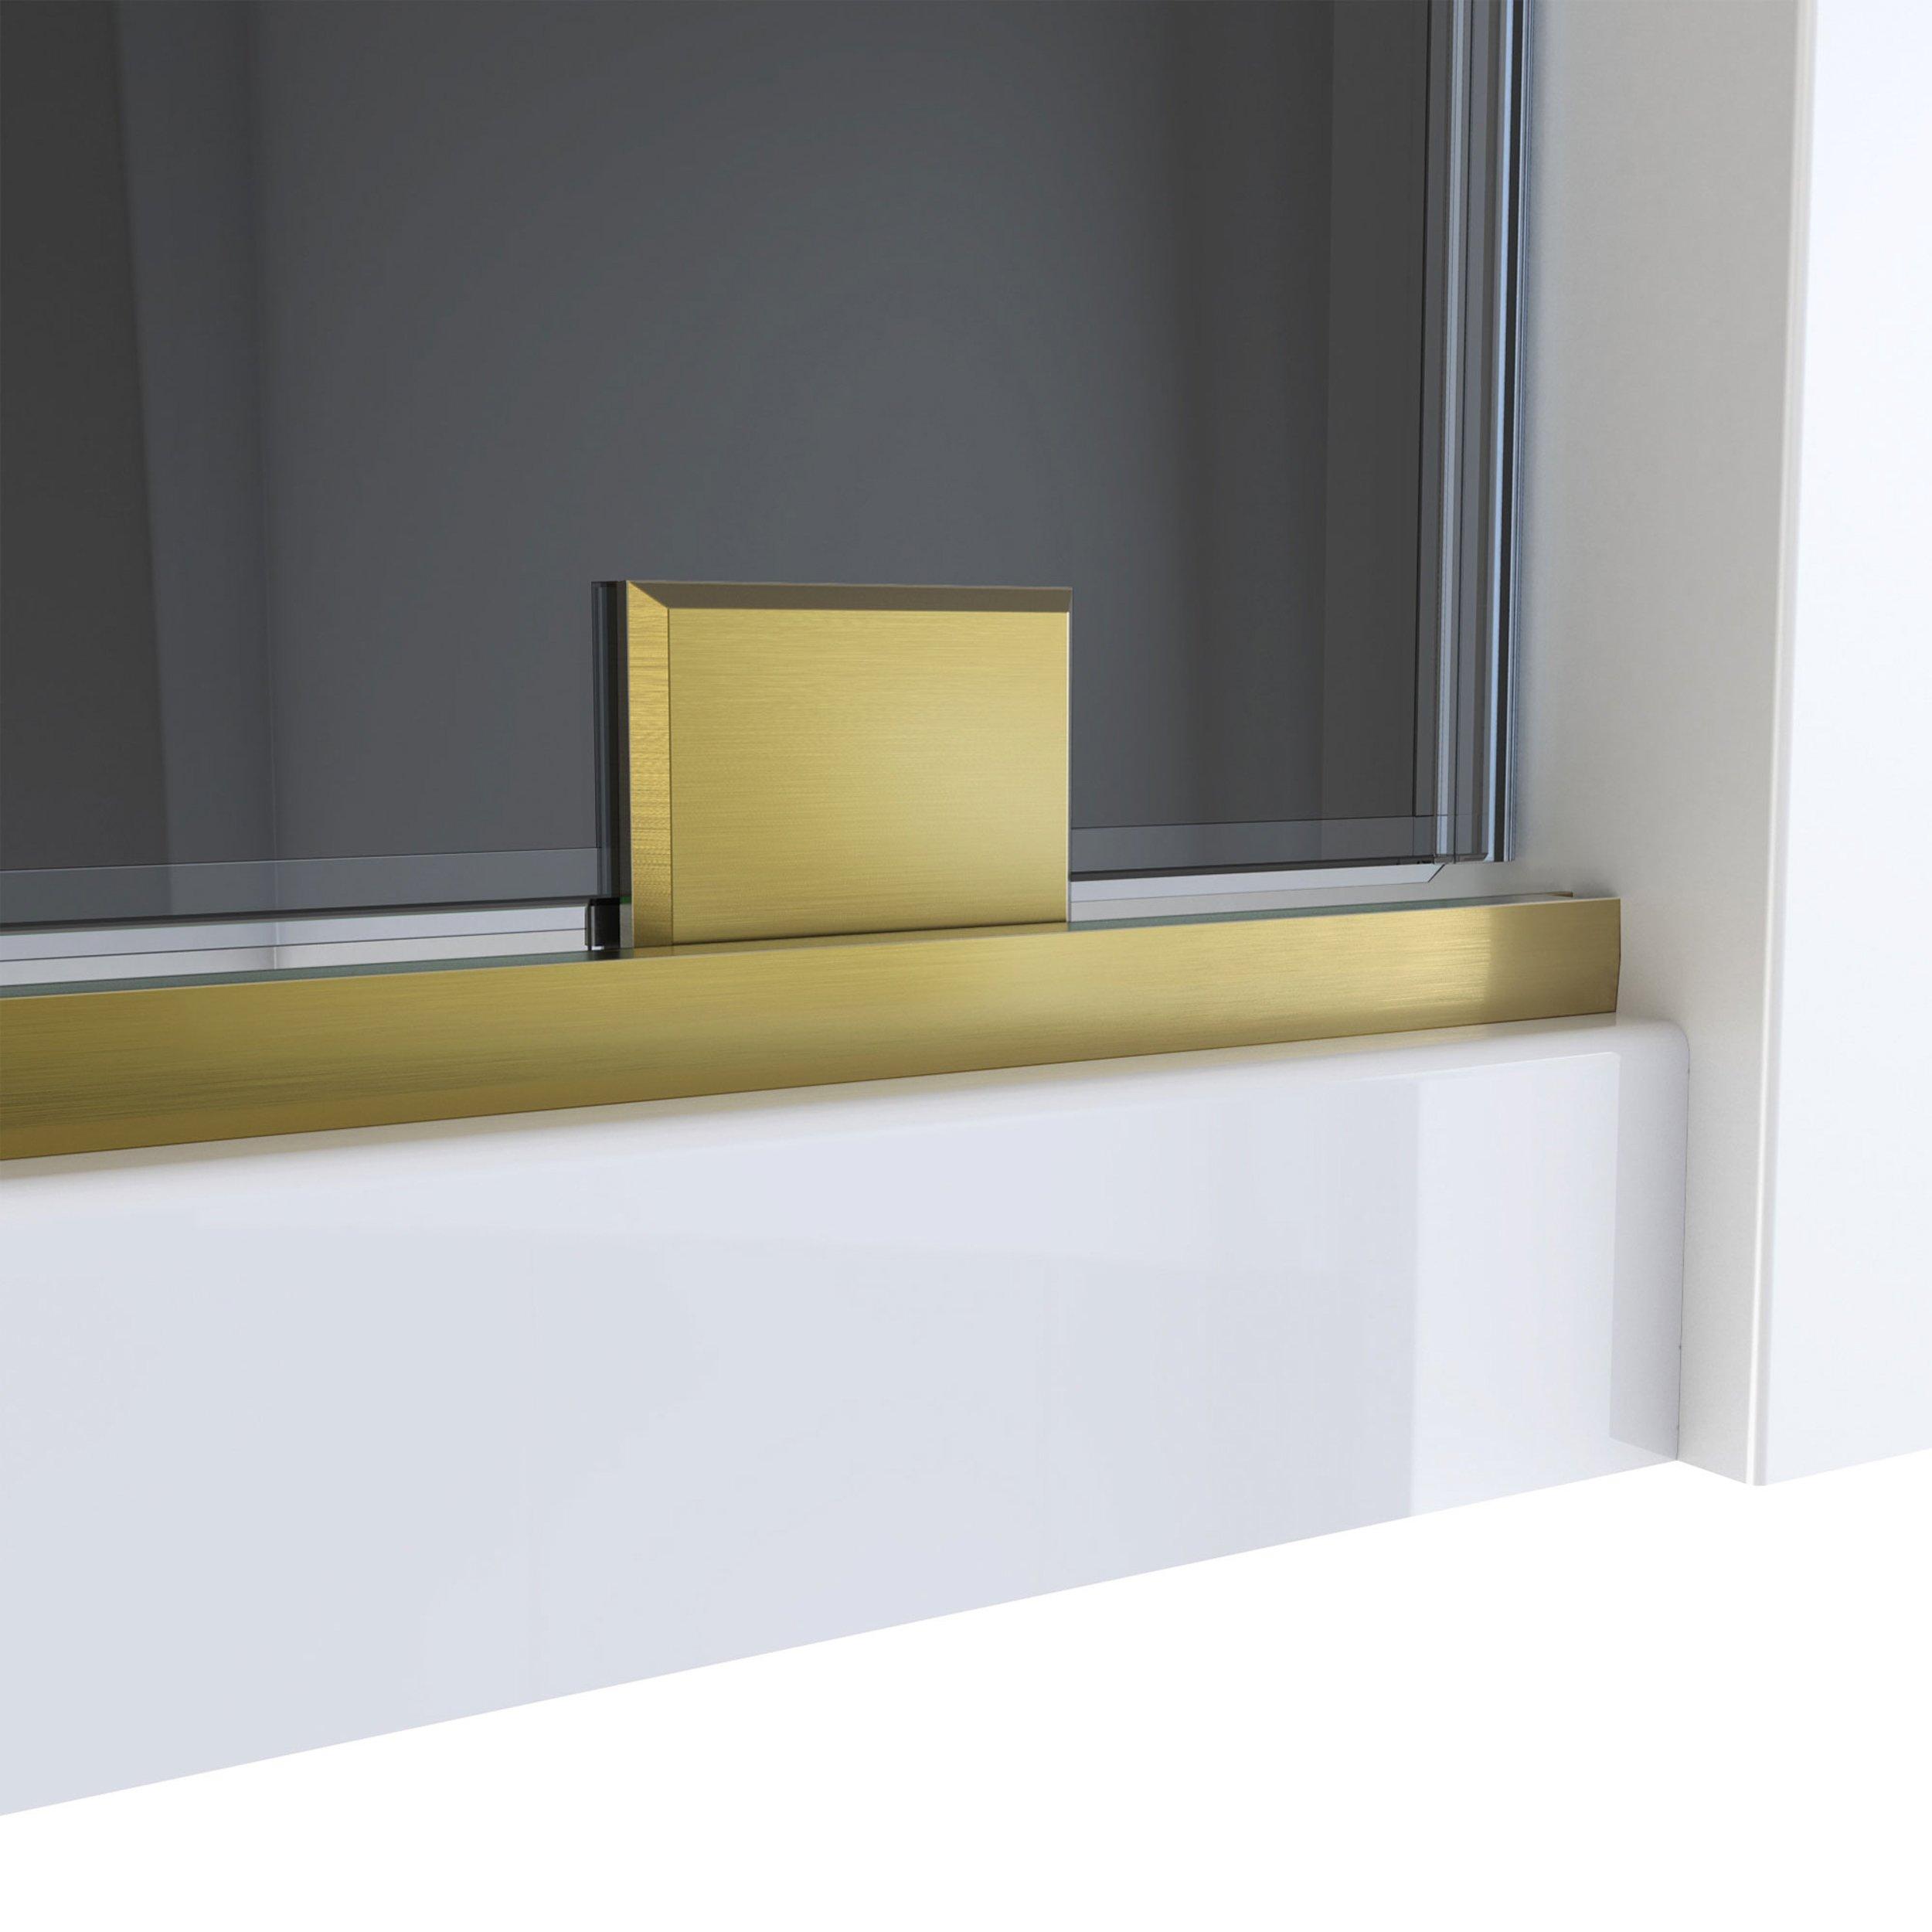 Mirage Brushed Gold Semi Frameless Shower Door